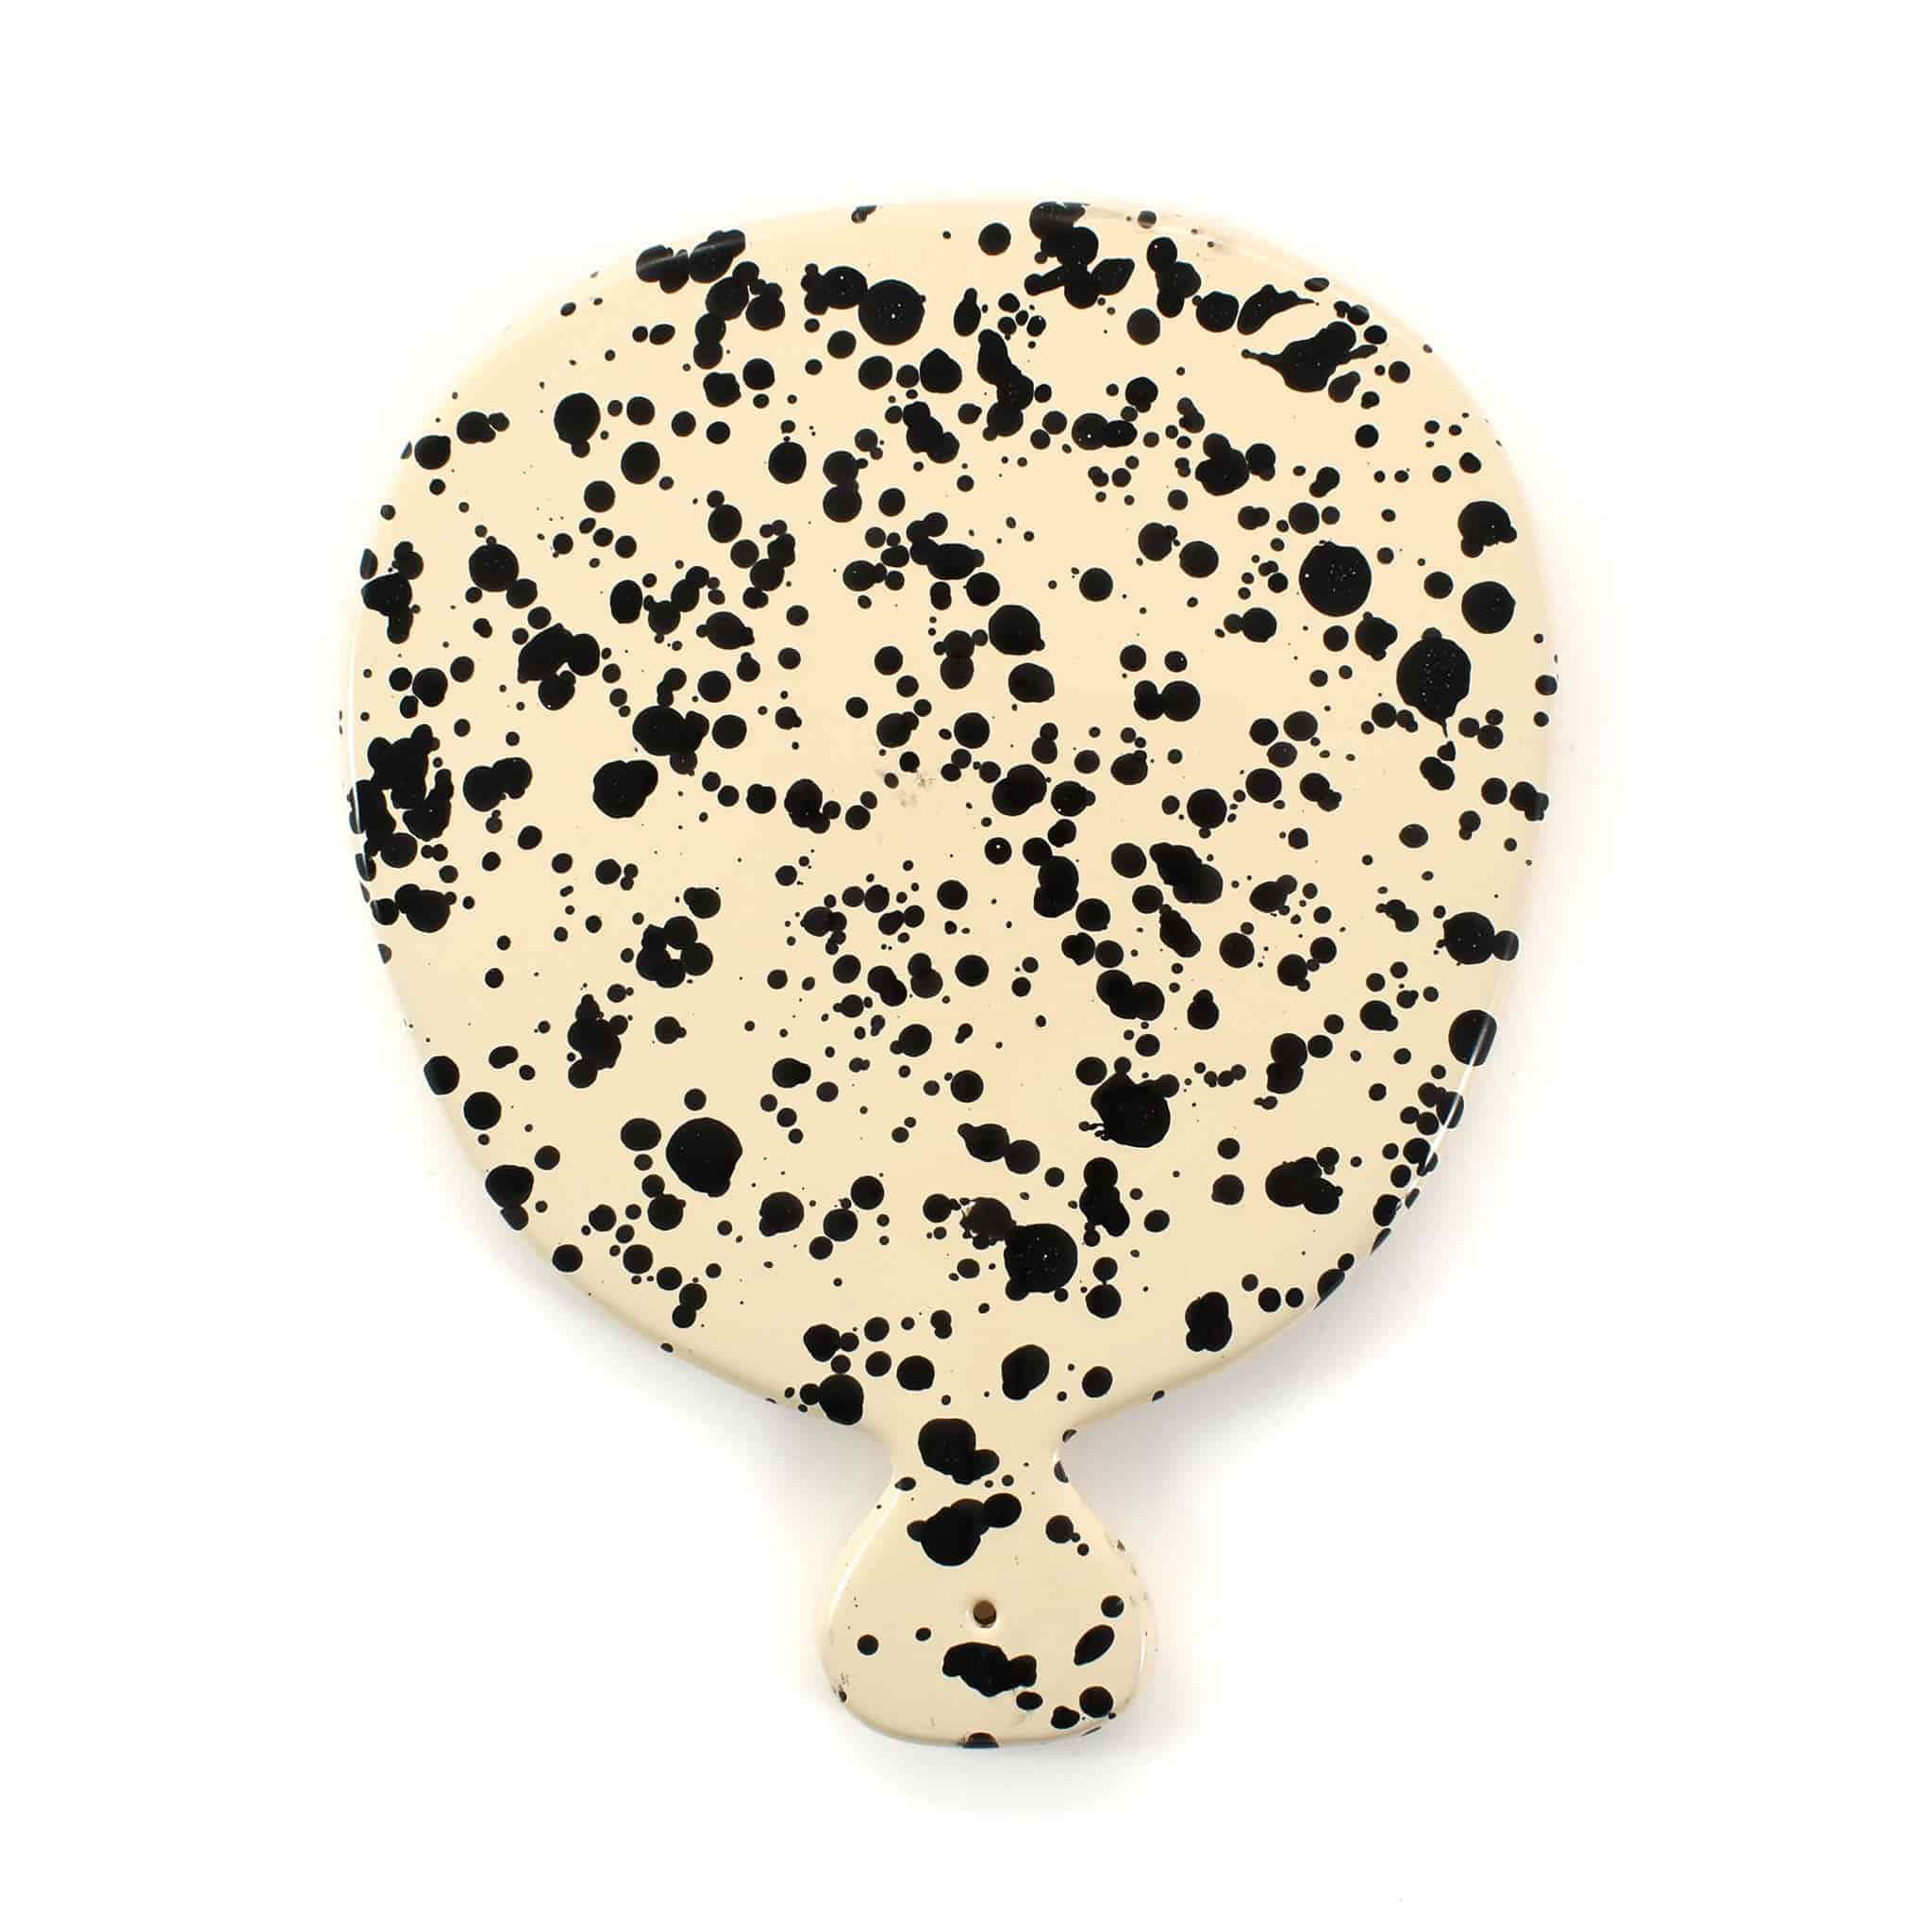 Puglia Black Splatter Ceramic Serving Board 25cm